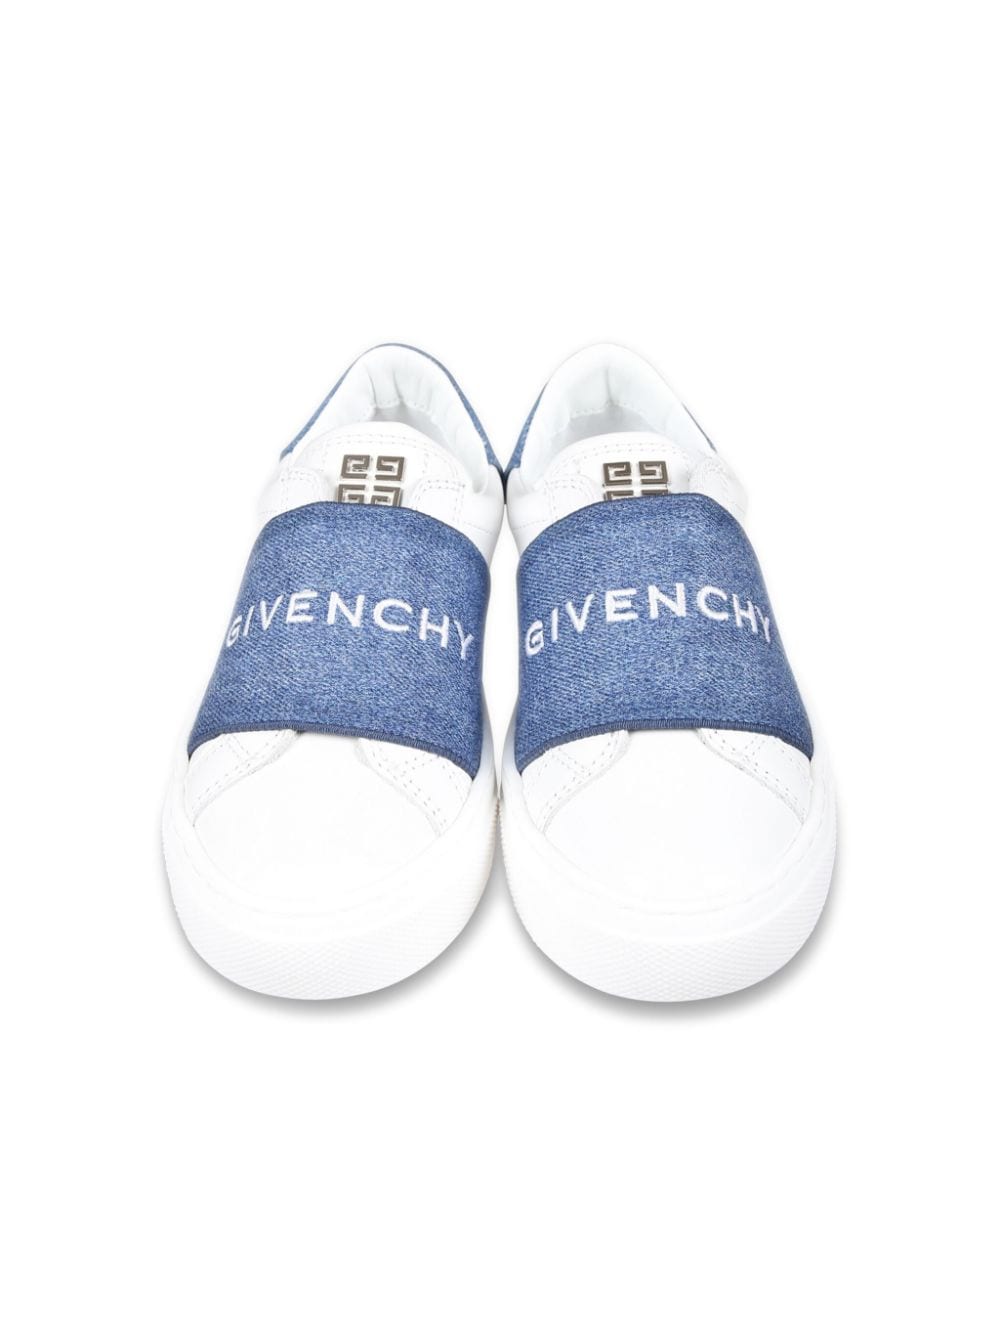 Givenchy Kids denim-panelled slip-on sneakers White